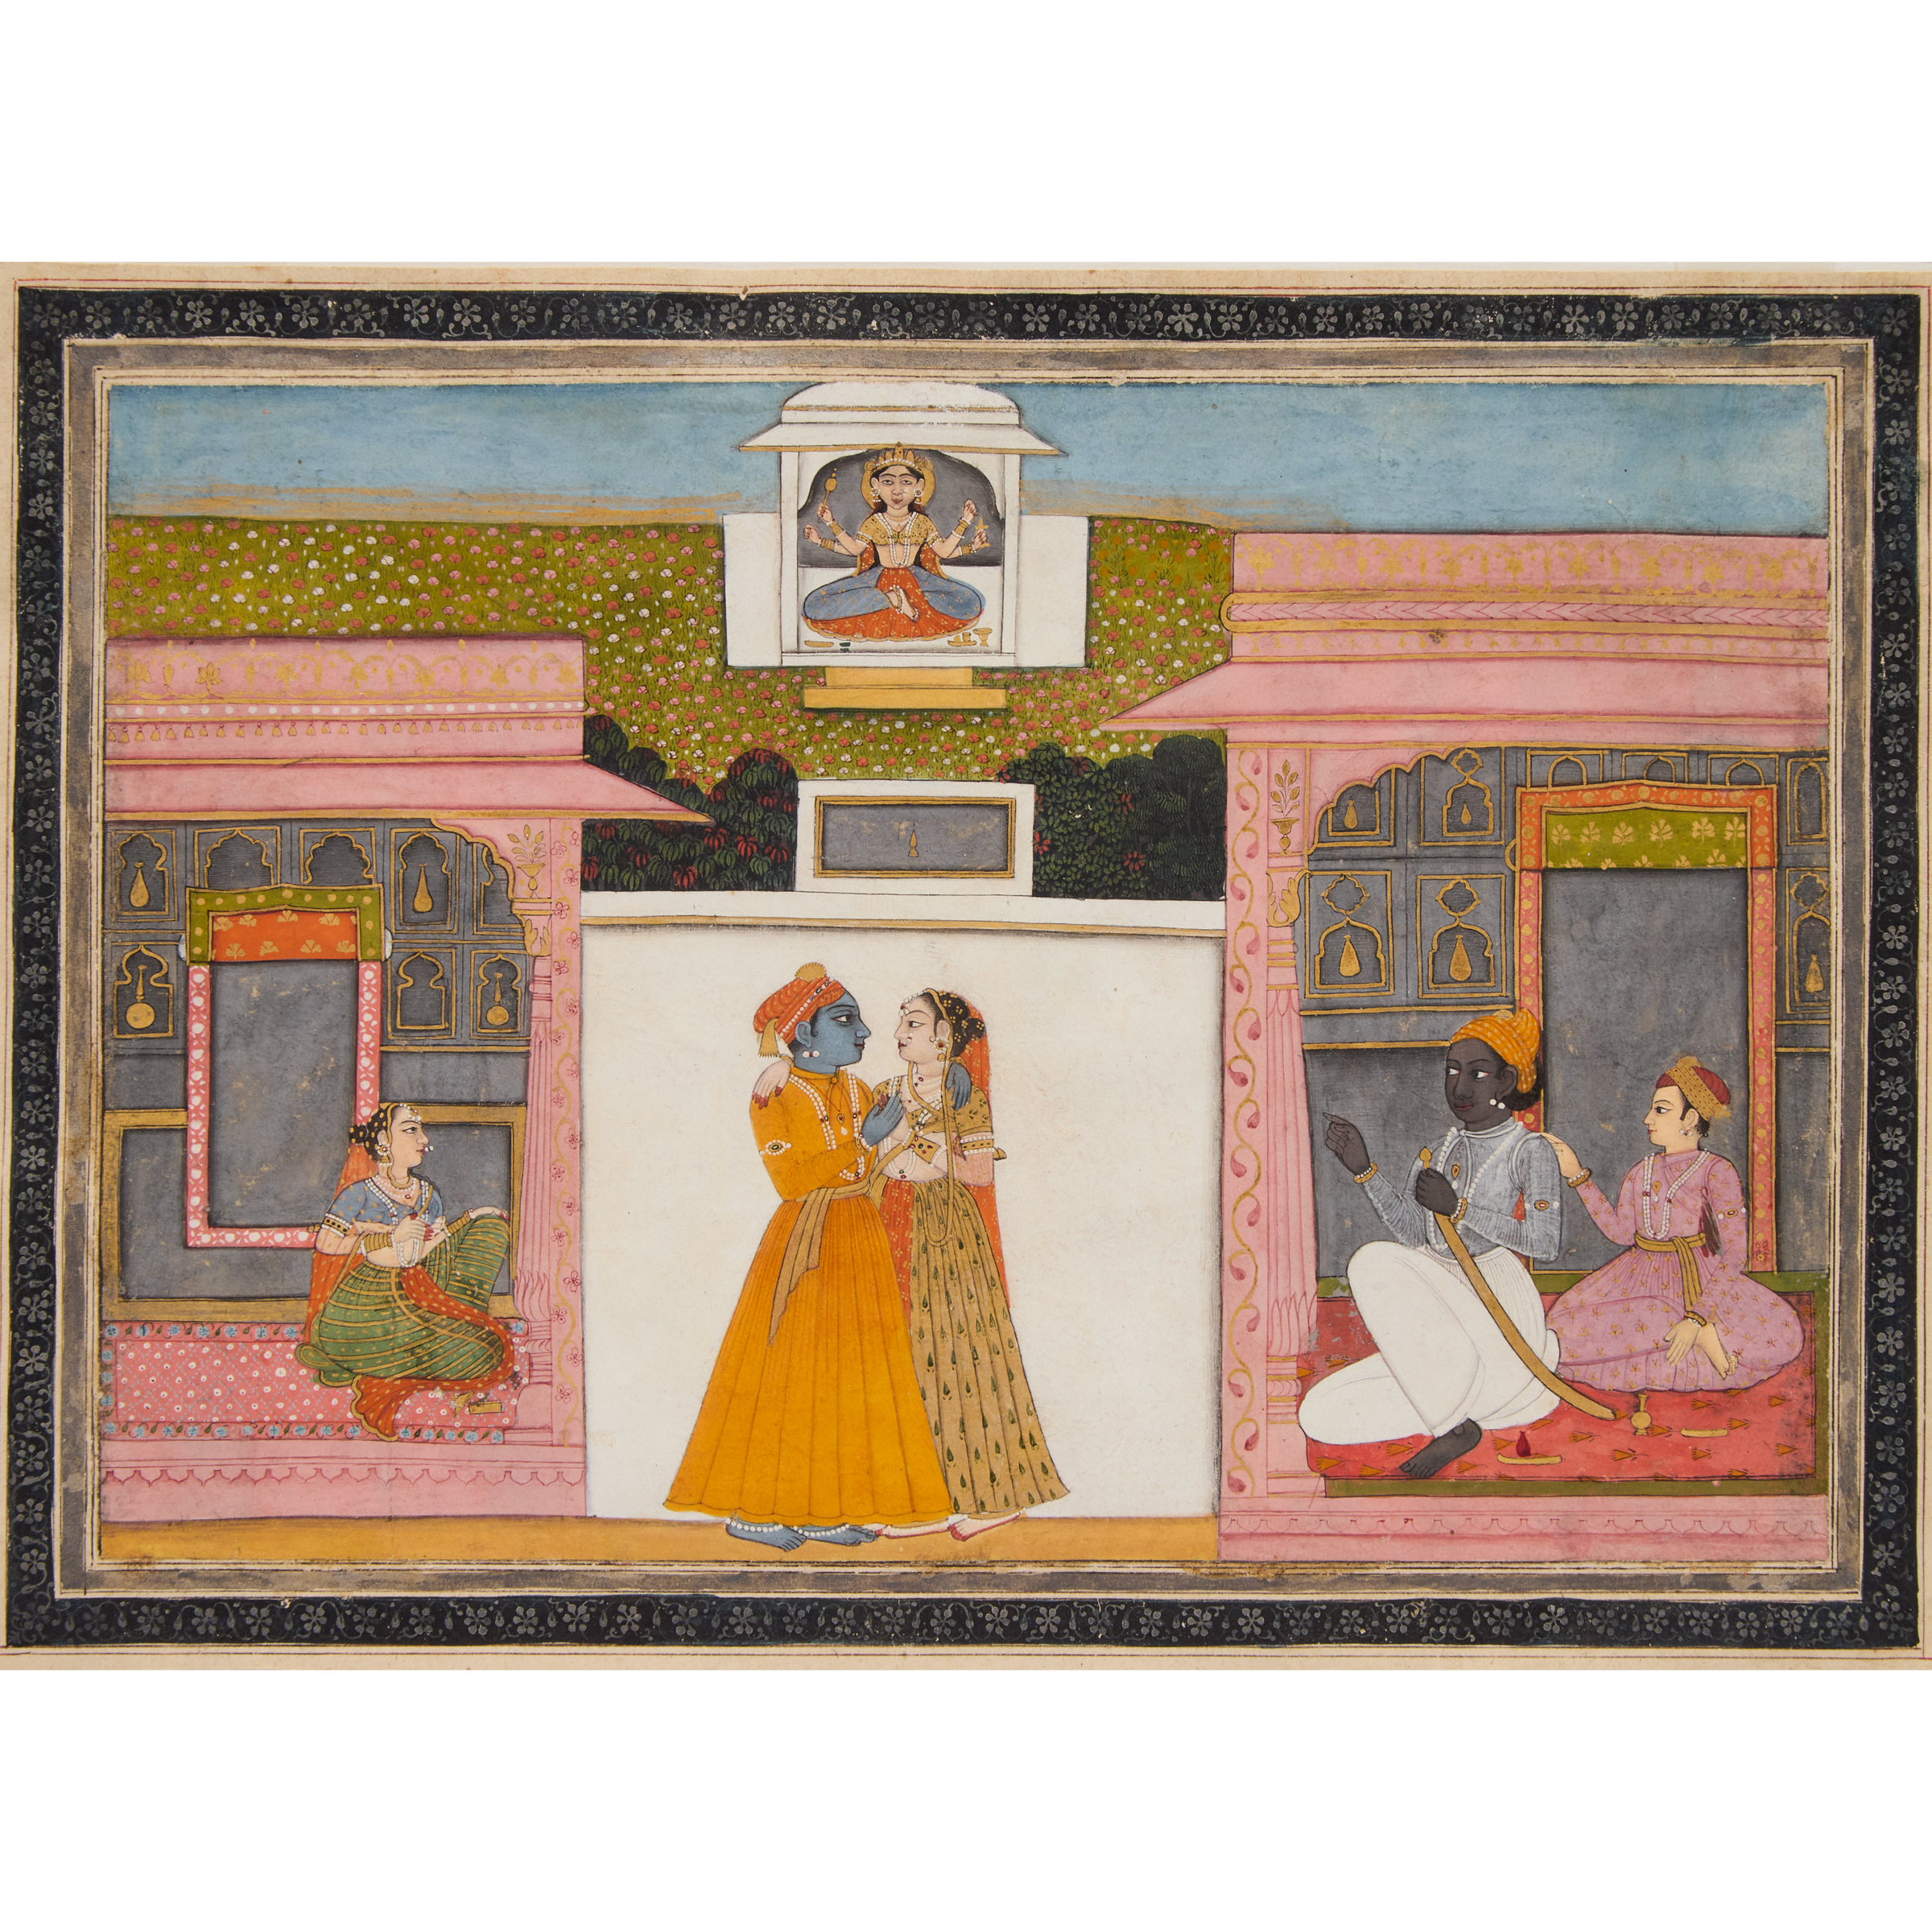 A Painting of Krishna and Radha, Rajasthan, North India, 18th Century